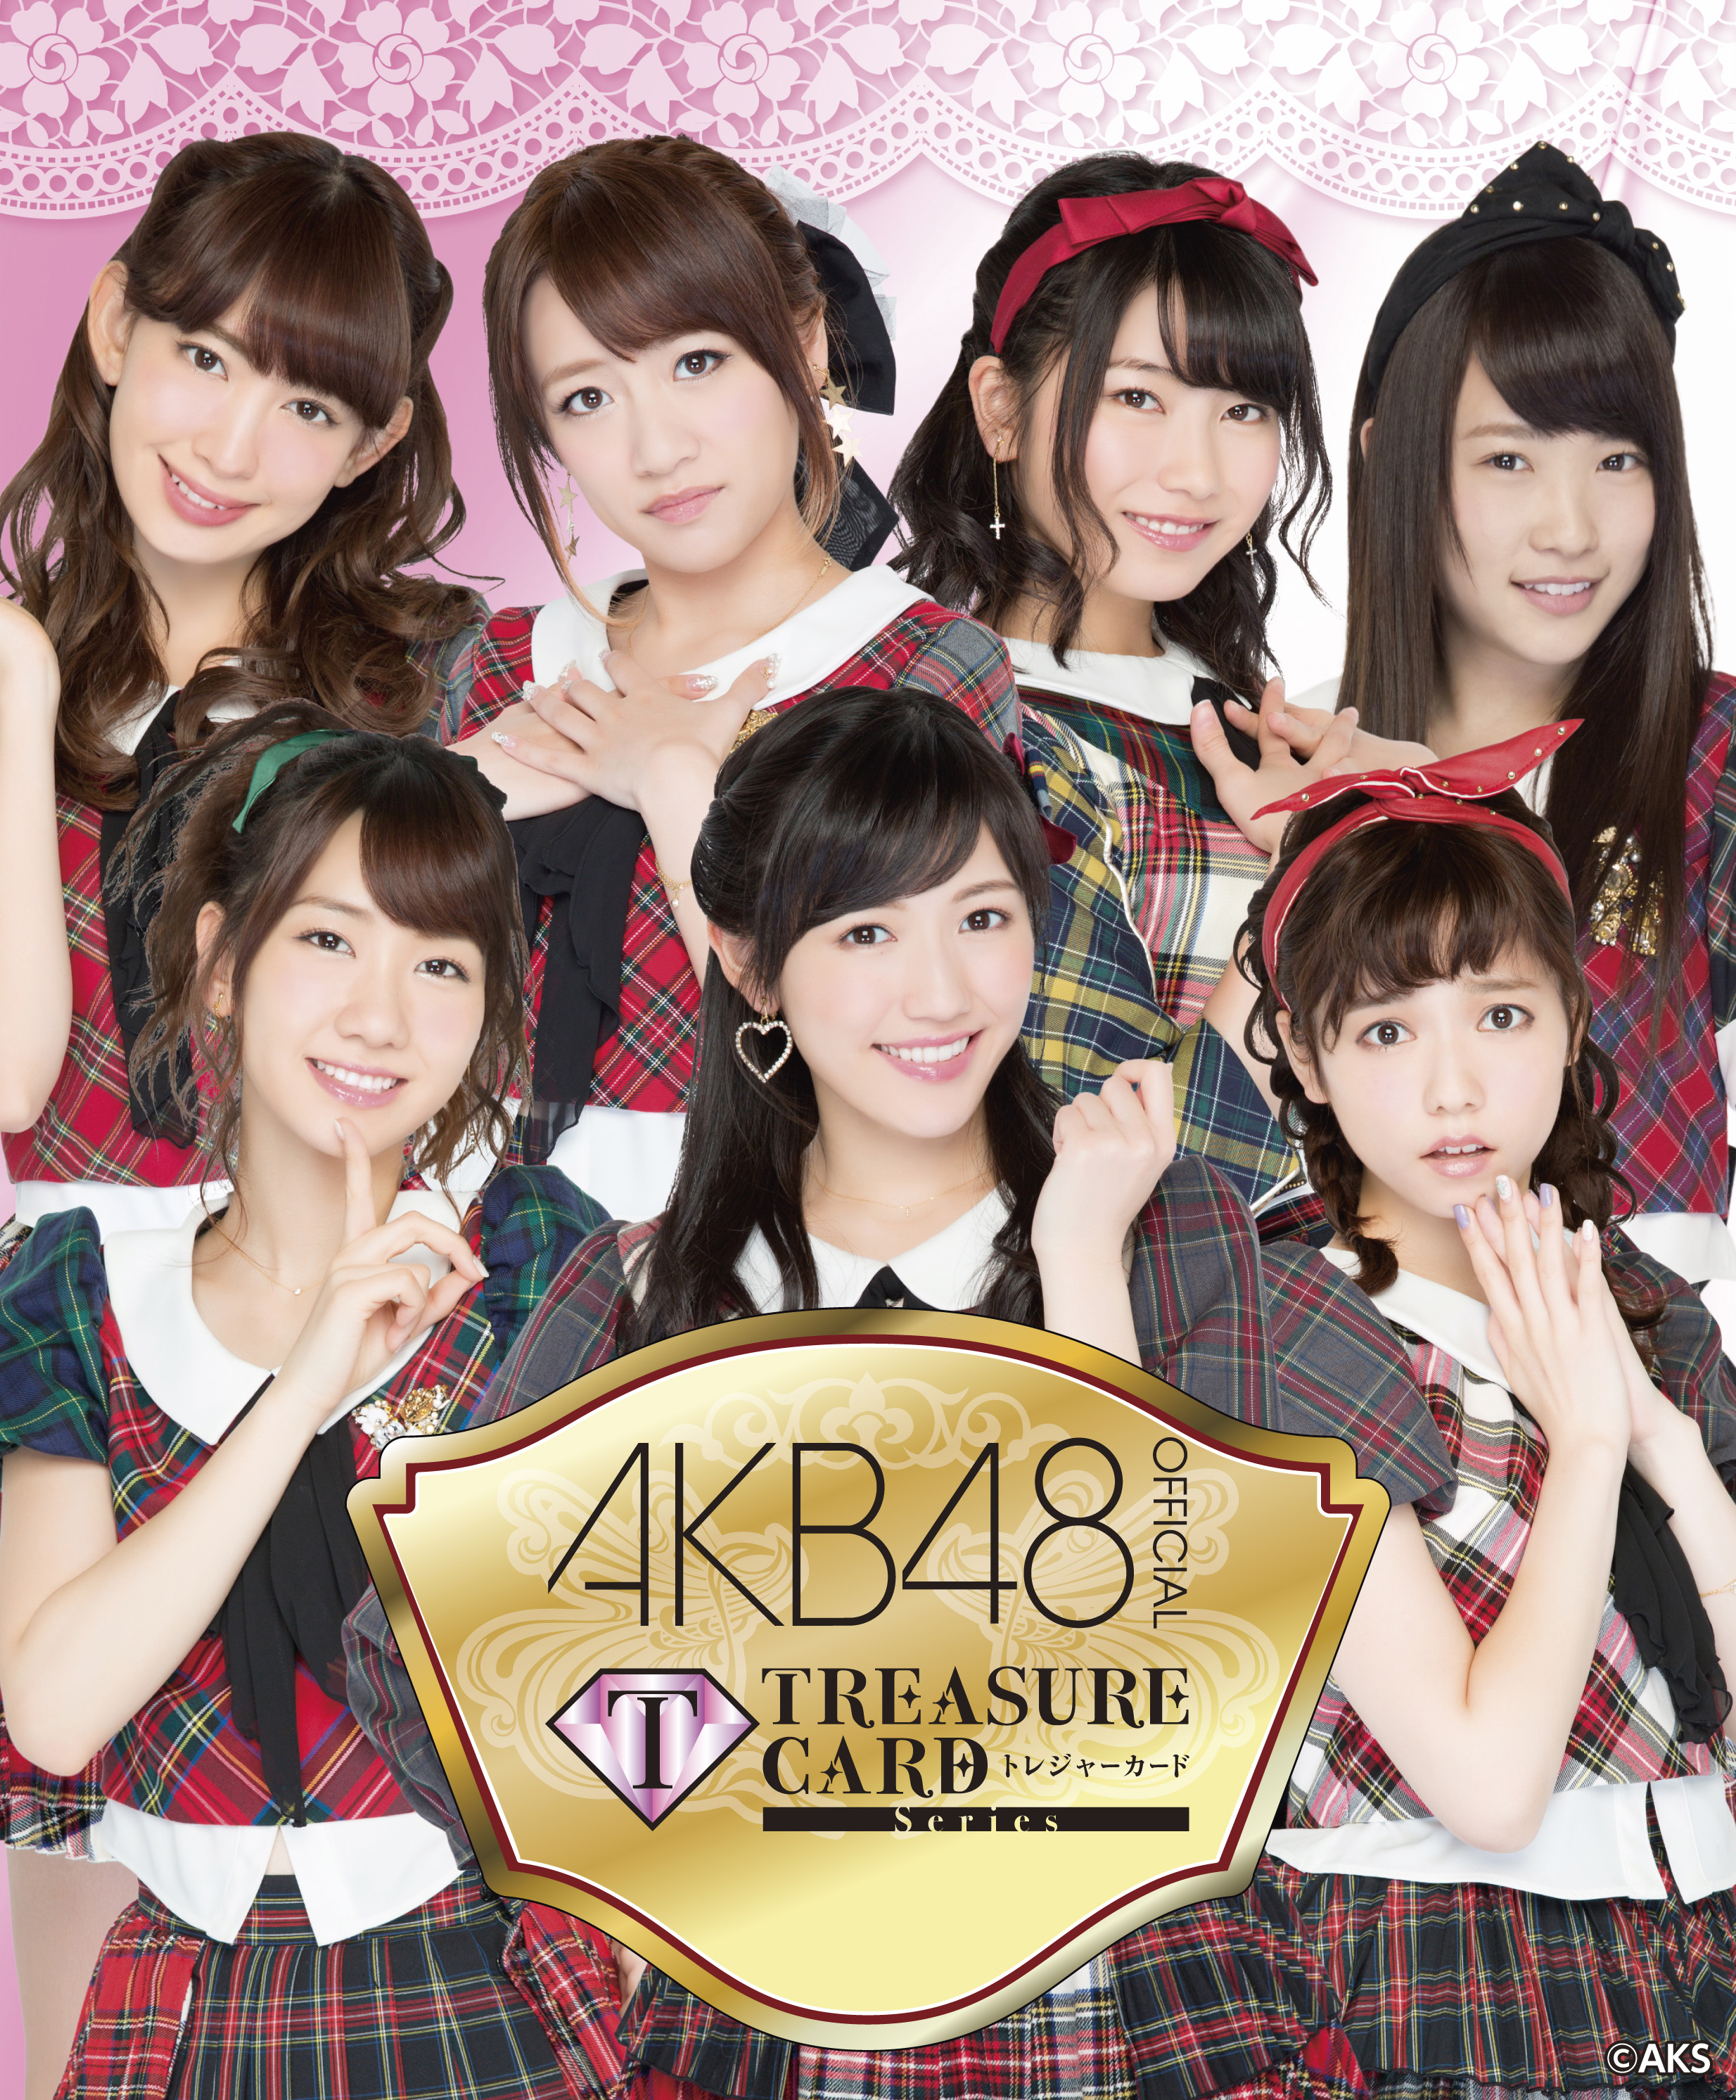 Akb48トレーディングカードが約2年半ぶりにパワーアップして登場 Akb48 Official Treasure Card オフィシャルトレジャーカード 全332種 株式会社hn Styleのプレスリリース